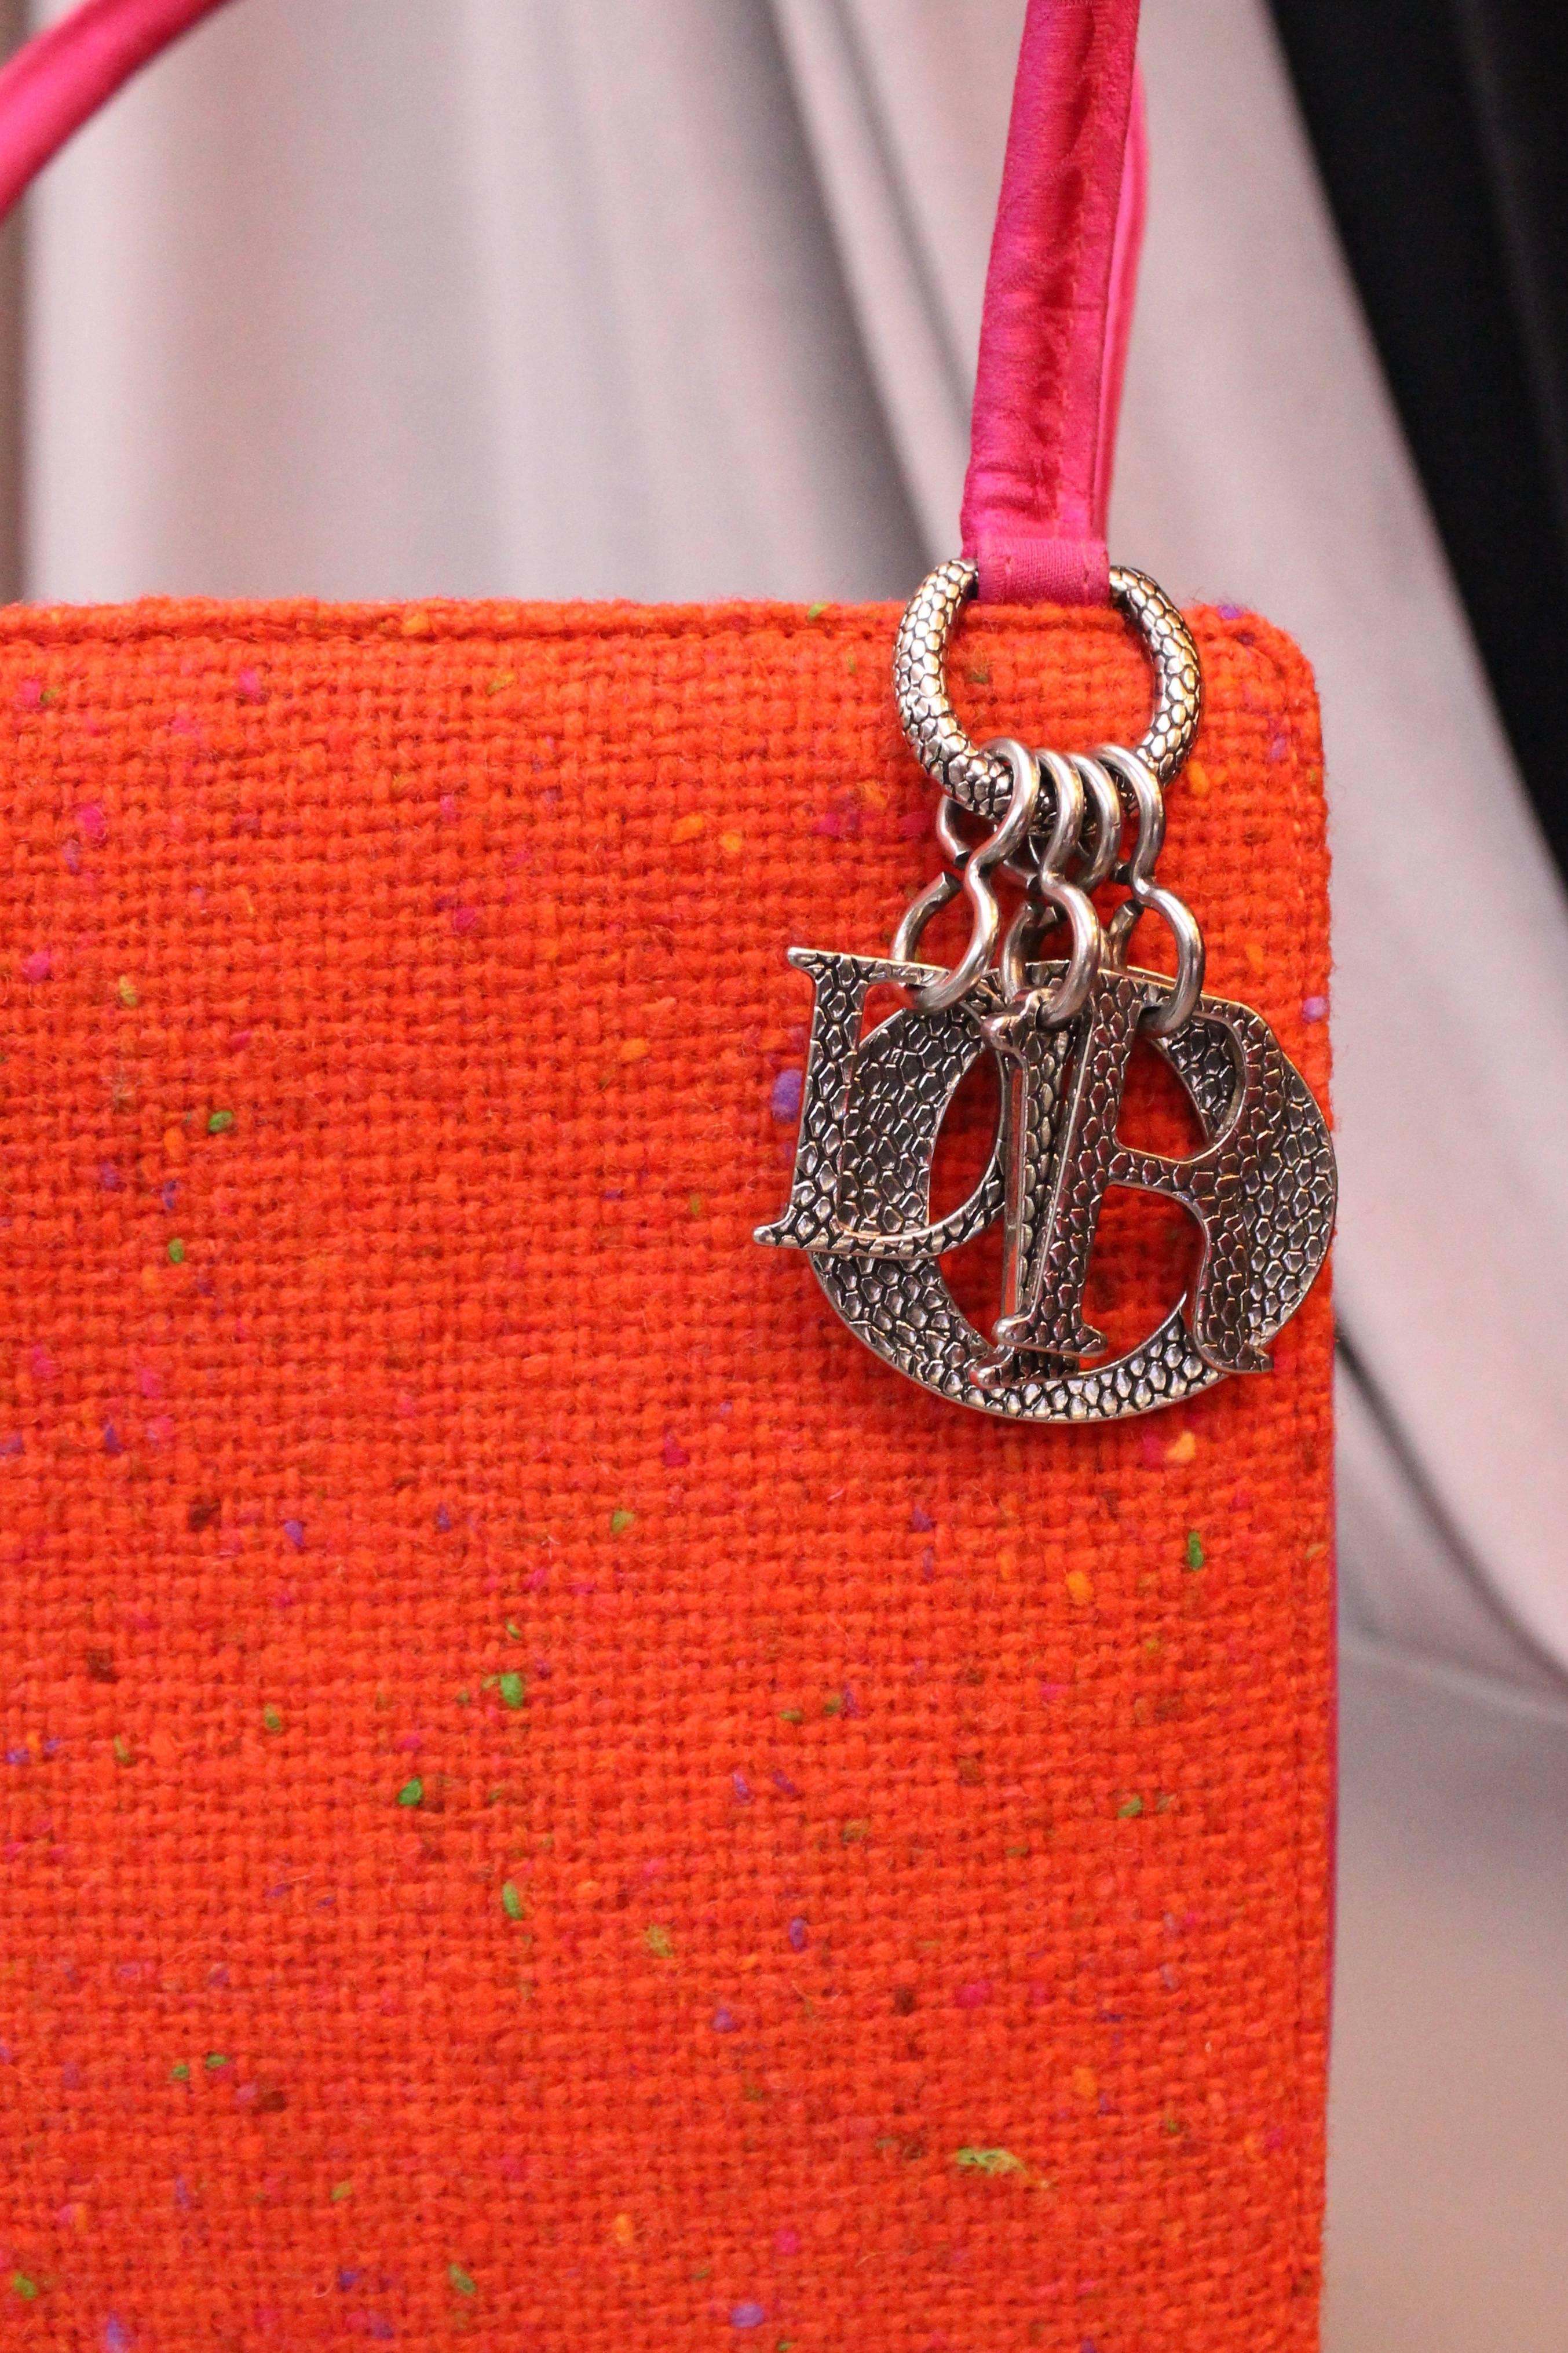 Pink Christian Dior Small Lady Dior bag in orange wool and fuchsia satin